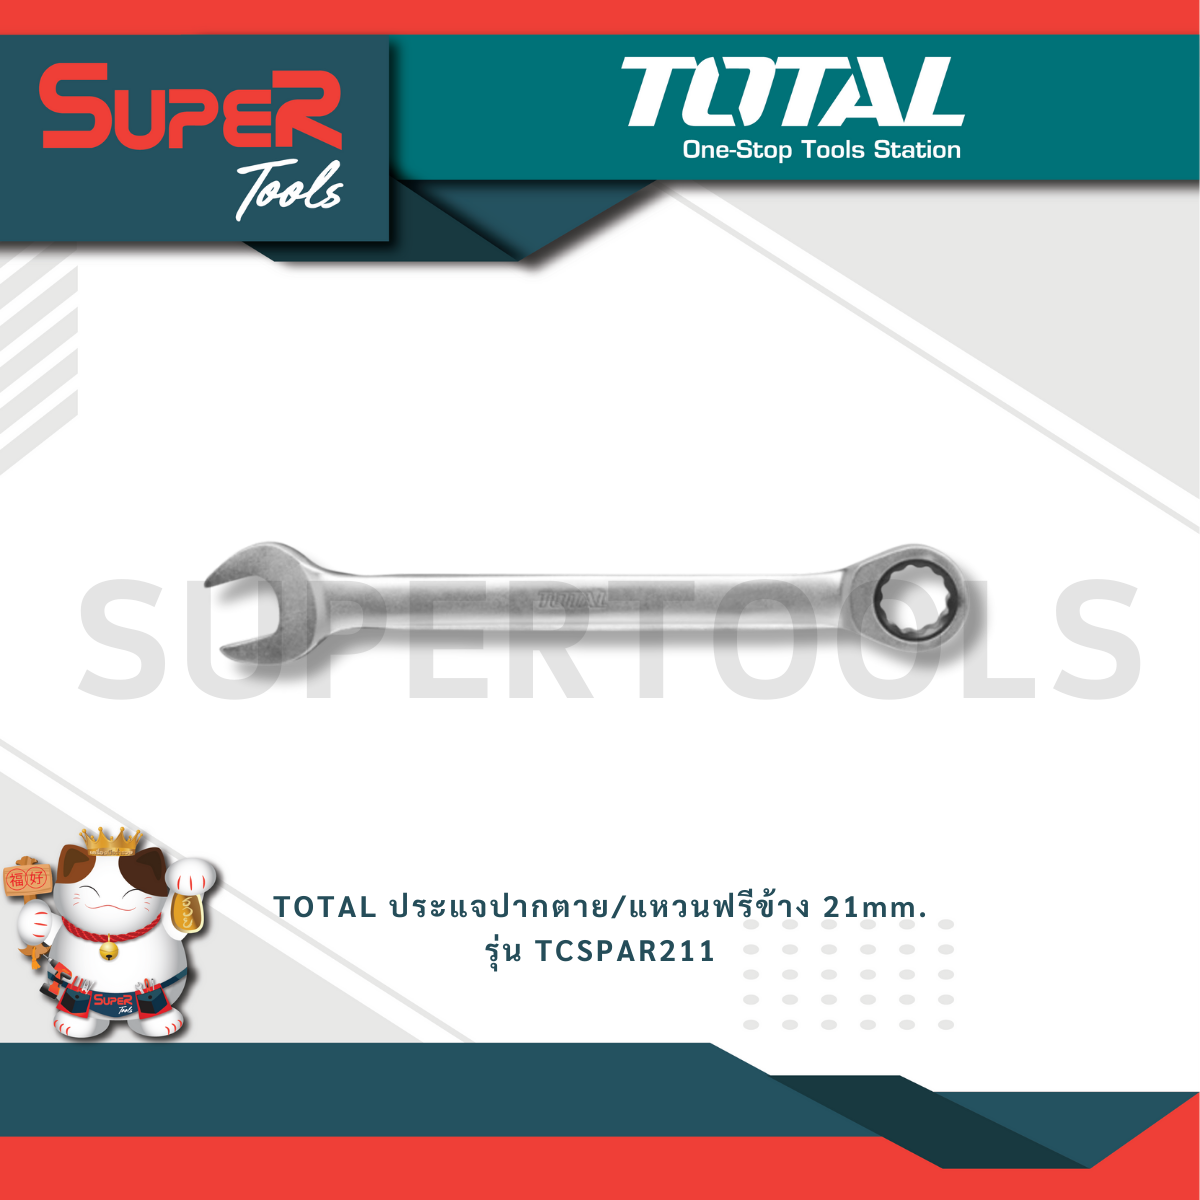 TOTAL ประแจปากตาย/แหวนฟรีข้าง 21mm. รุ่น TCSPAR211